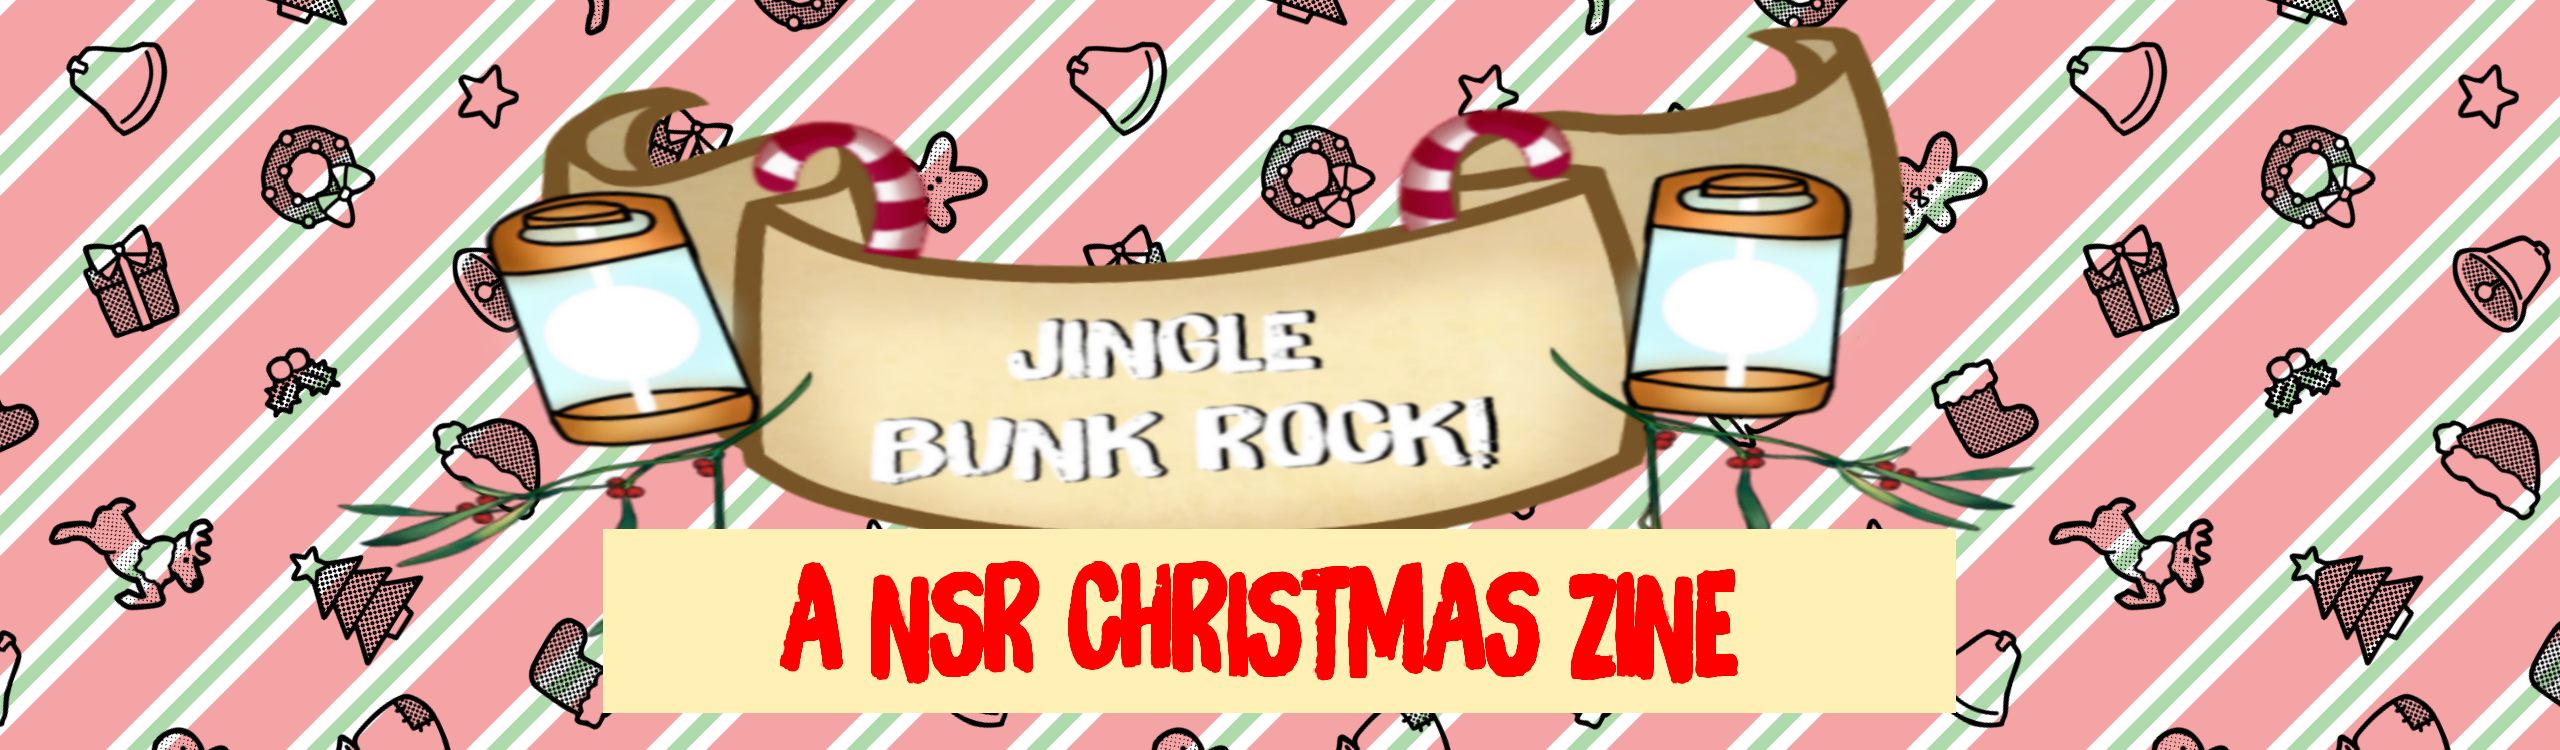 Jingle Bunk Rock!: A NSR Christmas Zine